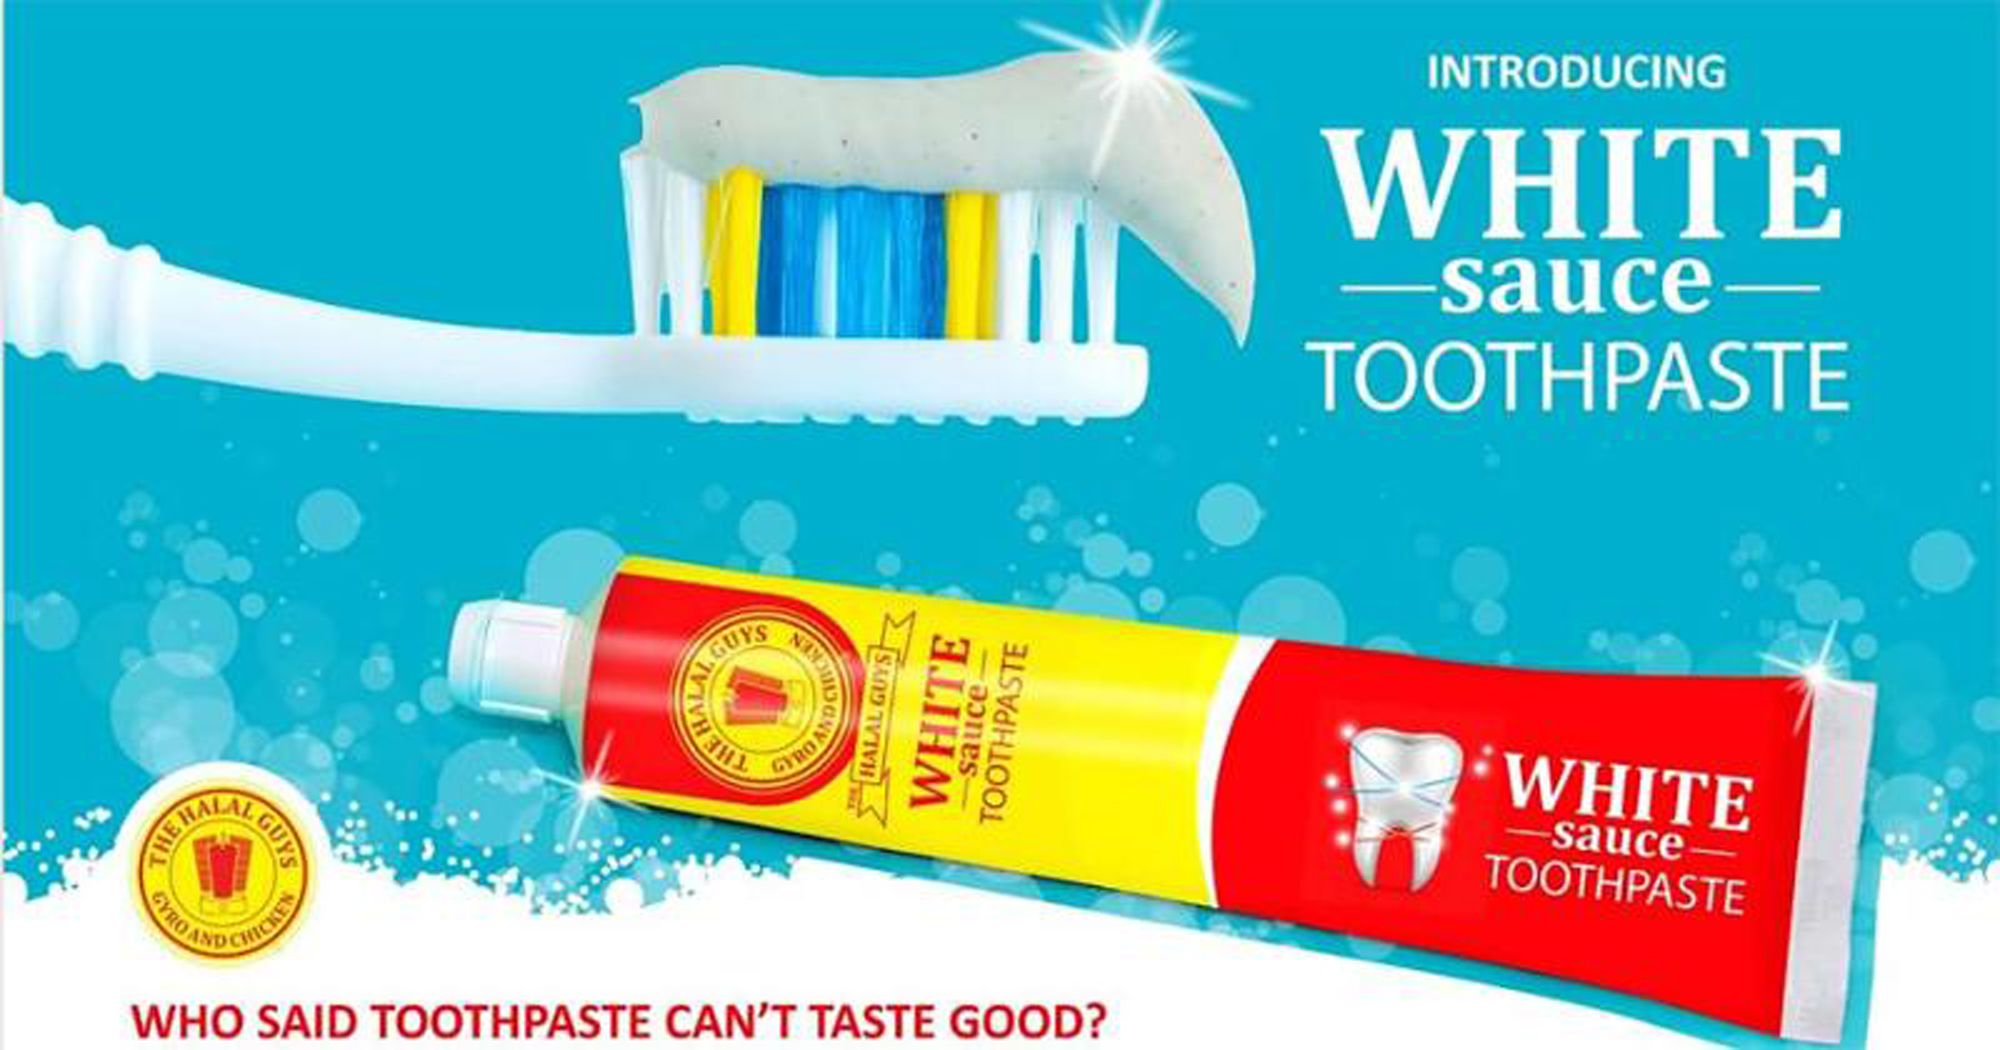 Halal Guys, White Sauce Toothpaste